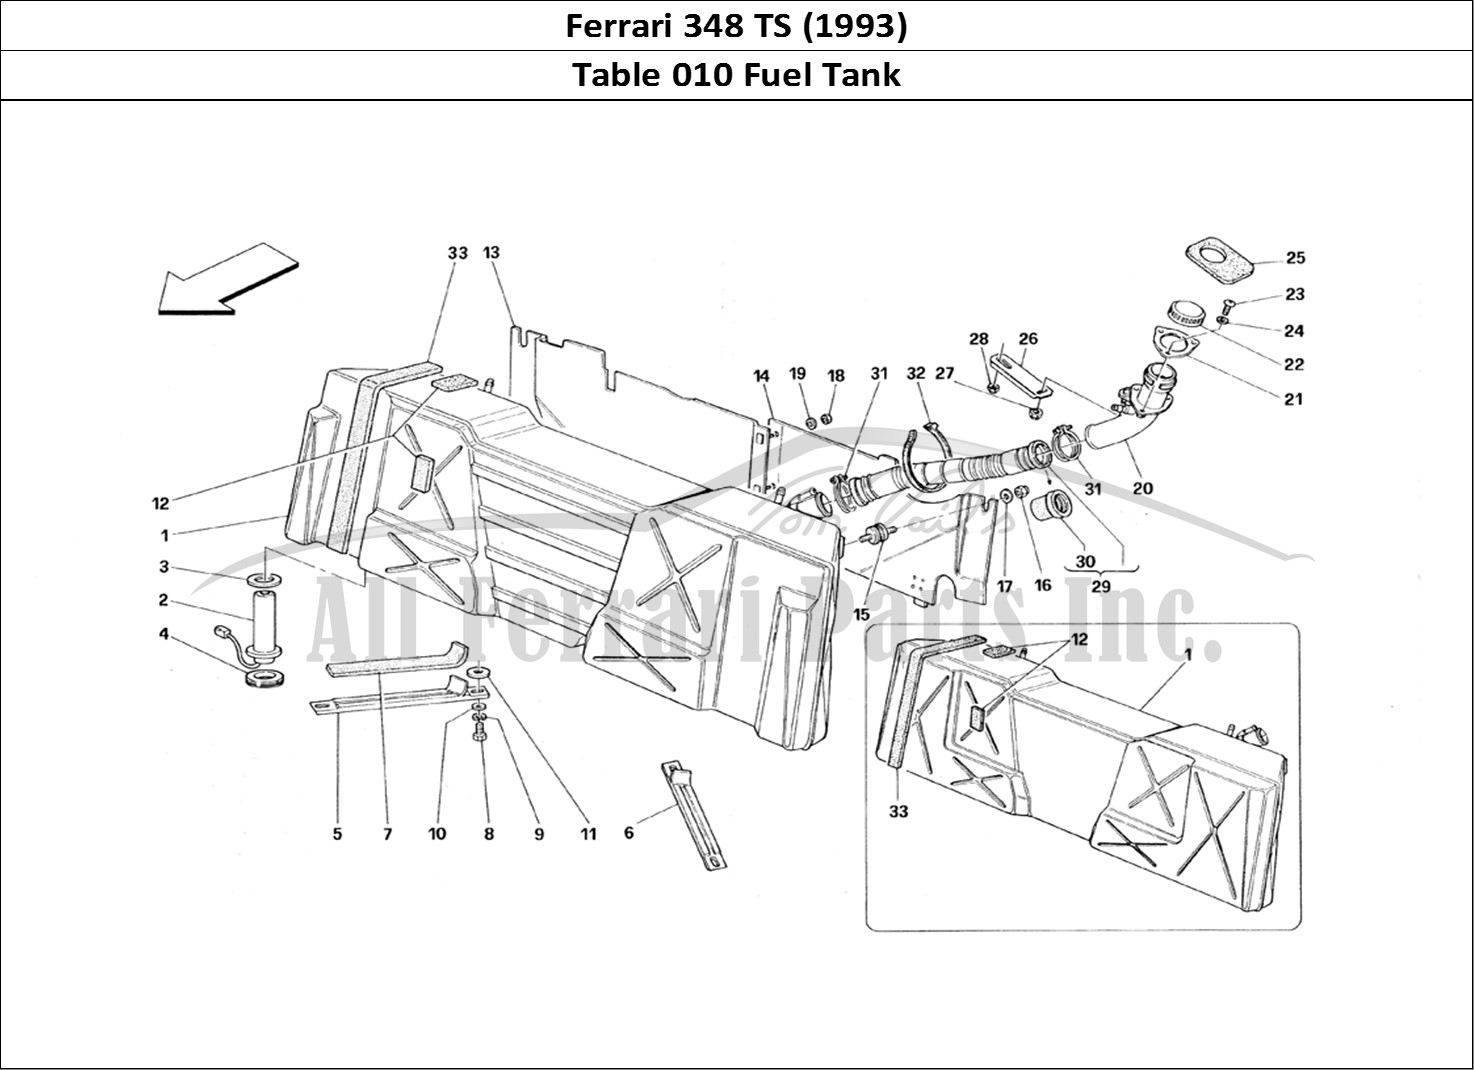 Ferrari Parts Ferrari 348 TB (1993) Page 010 Fuel Tank